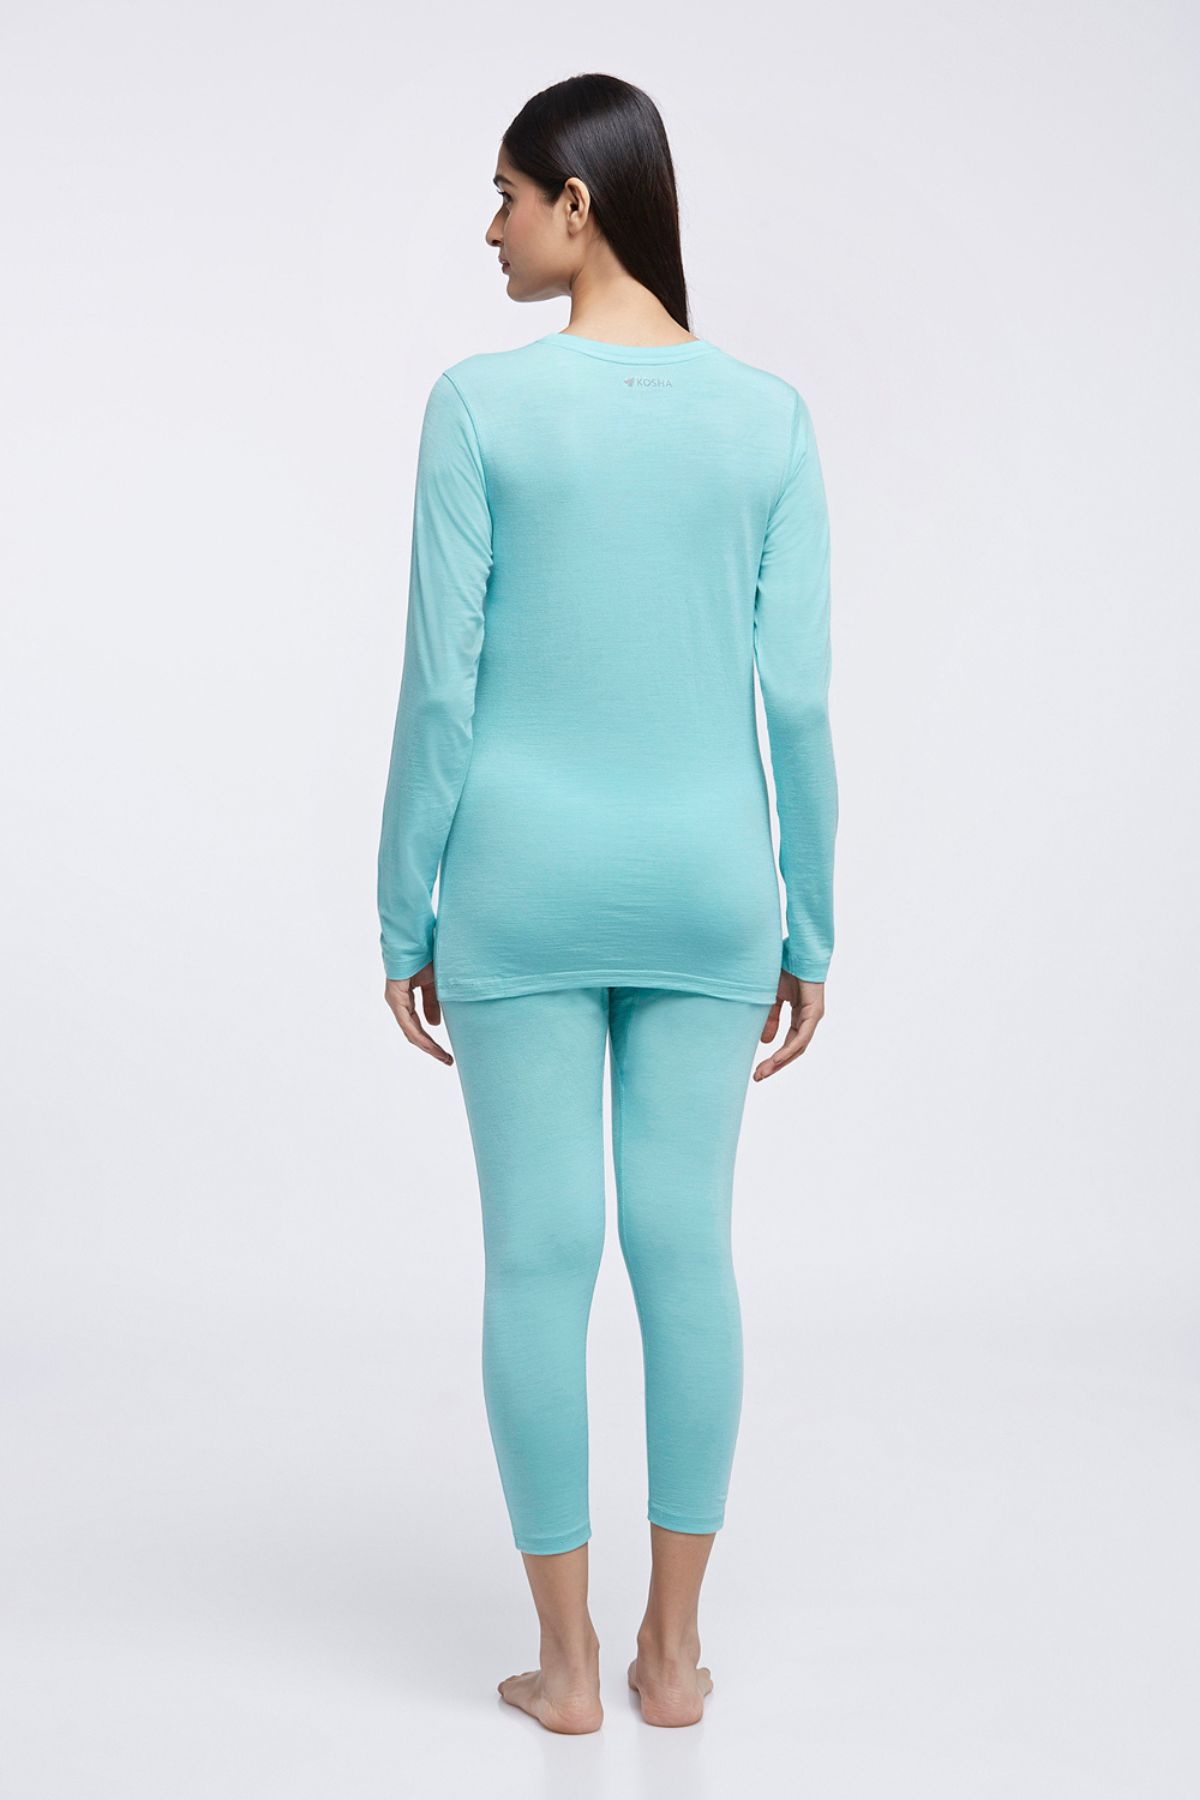 Thermals Pants for Women  Buy Wool Leggings & Ski Pants for Women Online -  Kosha